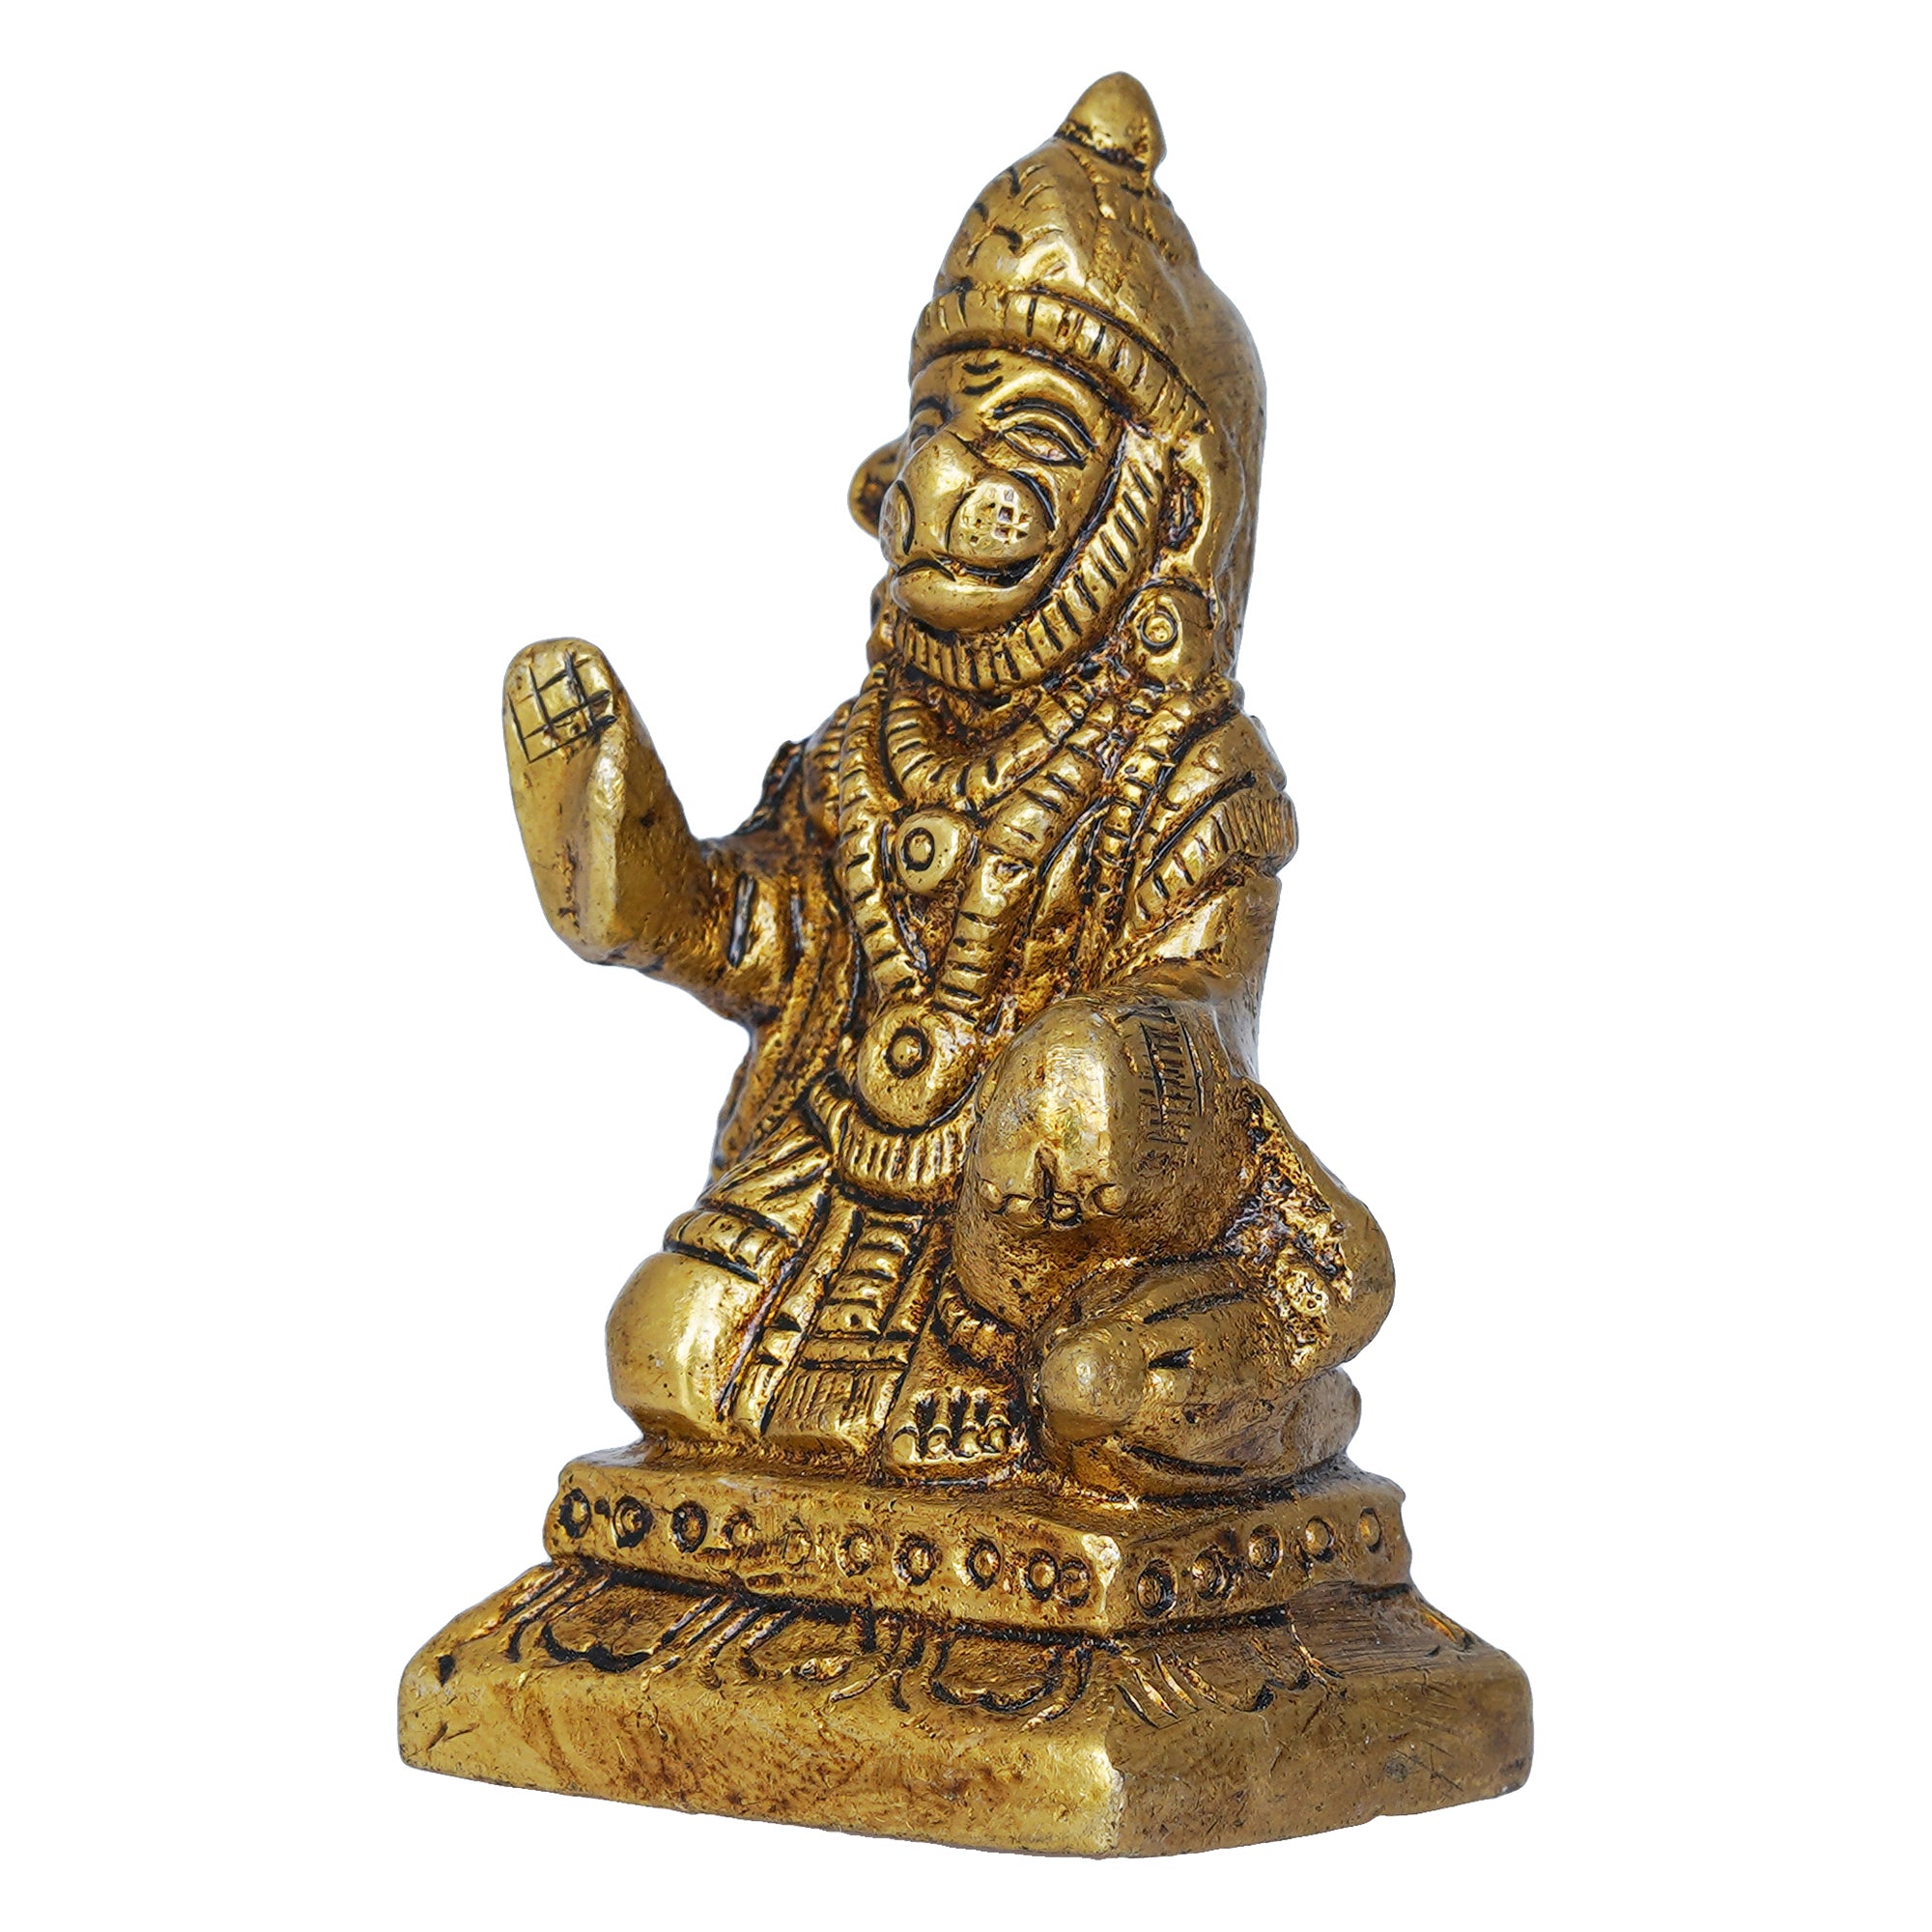 Golden Brass Blessing Lord Hanuman Statue Murti - Hindu God Idol for Home, Office, Temple Mandir - Hanuman Jayanti Gift 6